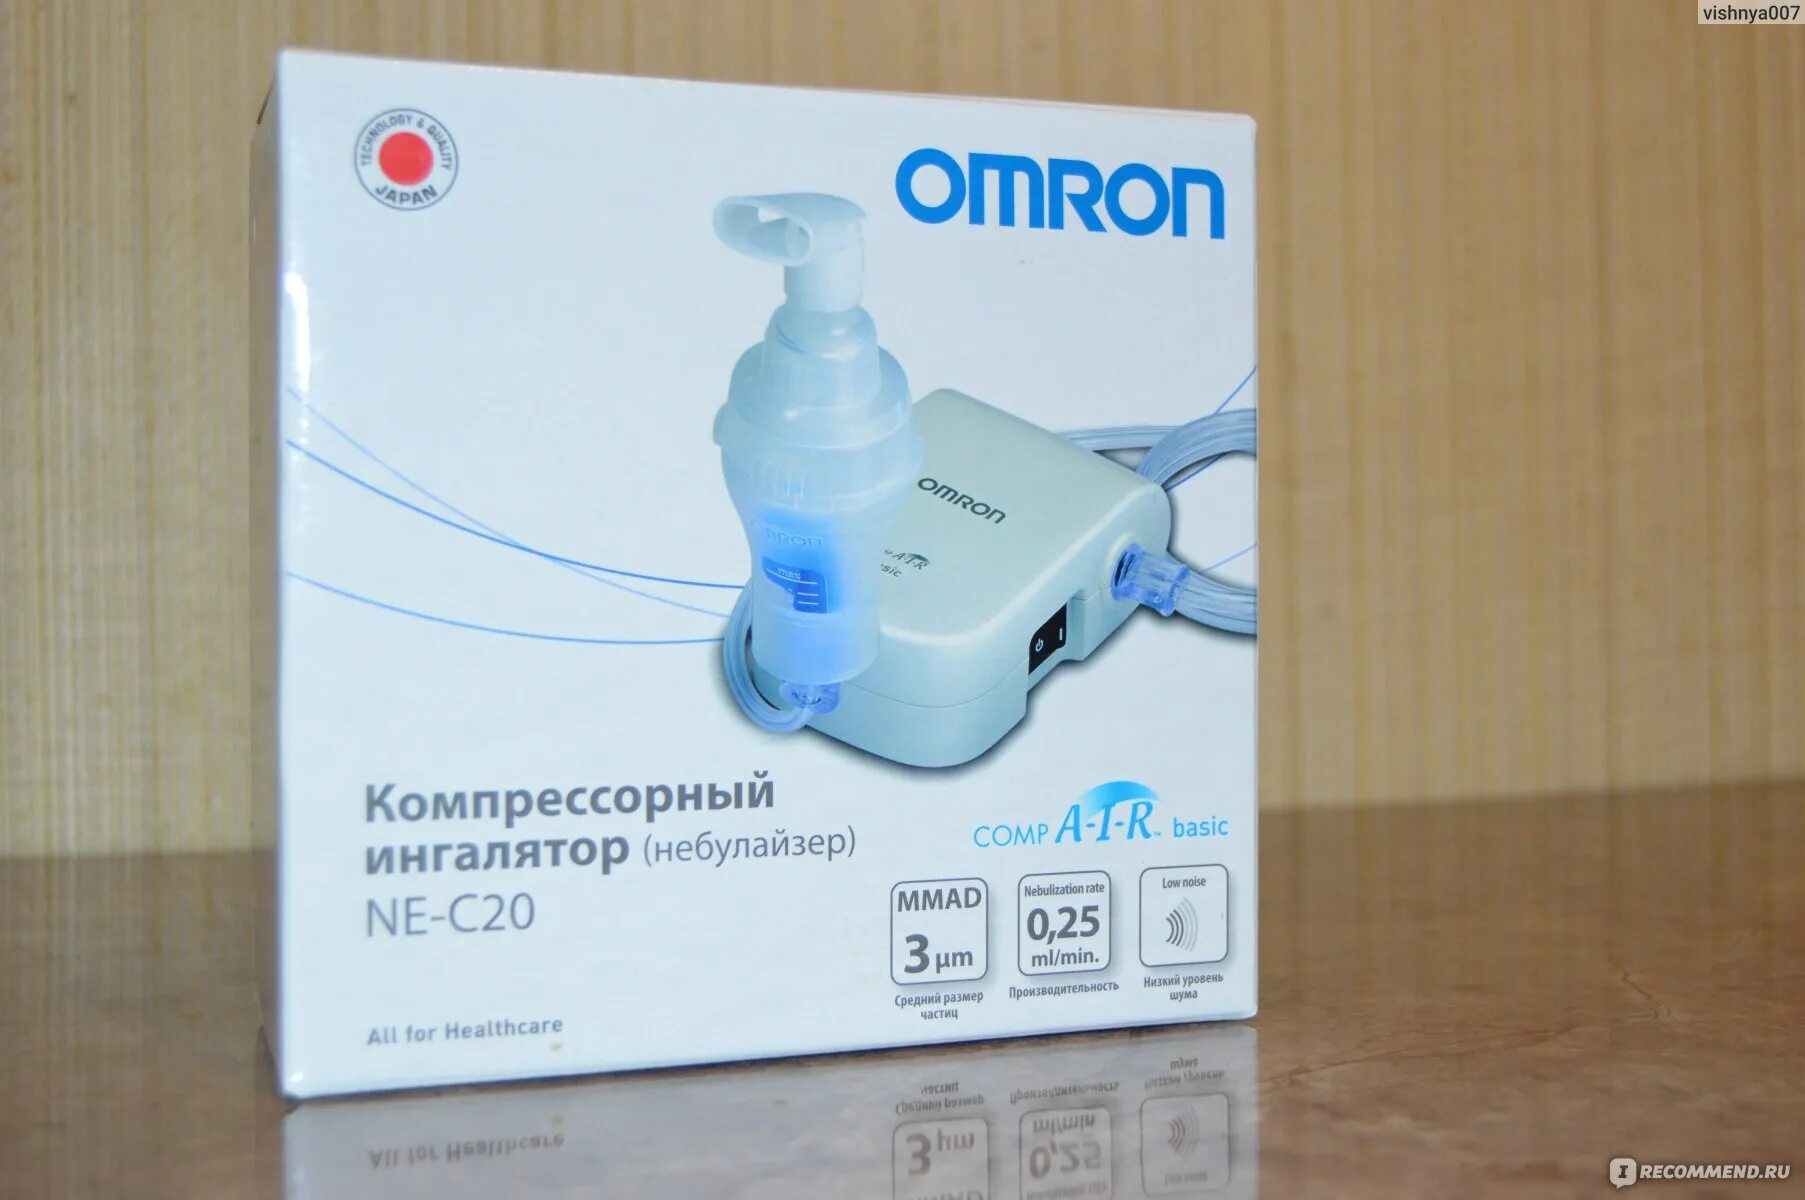 Компрессионный ингалятор небулайзер Omron ne-c20. Лекарства для ингалятора компрессорного. Небулайзер для ингаляций при аллергии взрослым. Ингаляции компрессионным небулайзером.